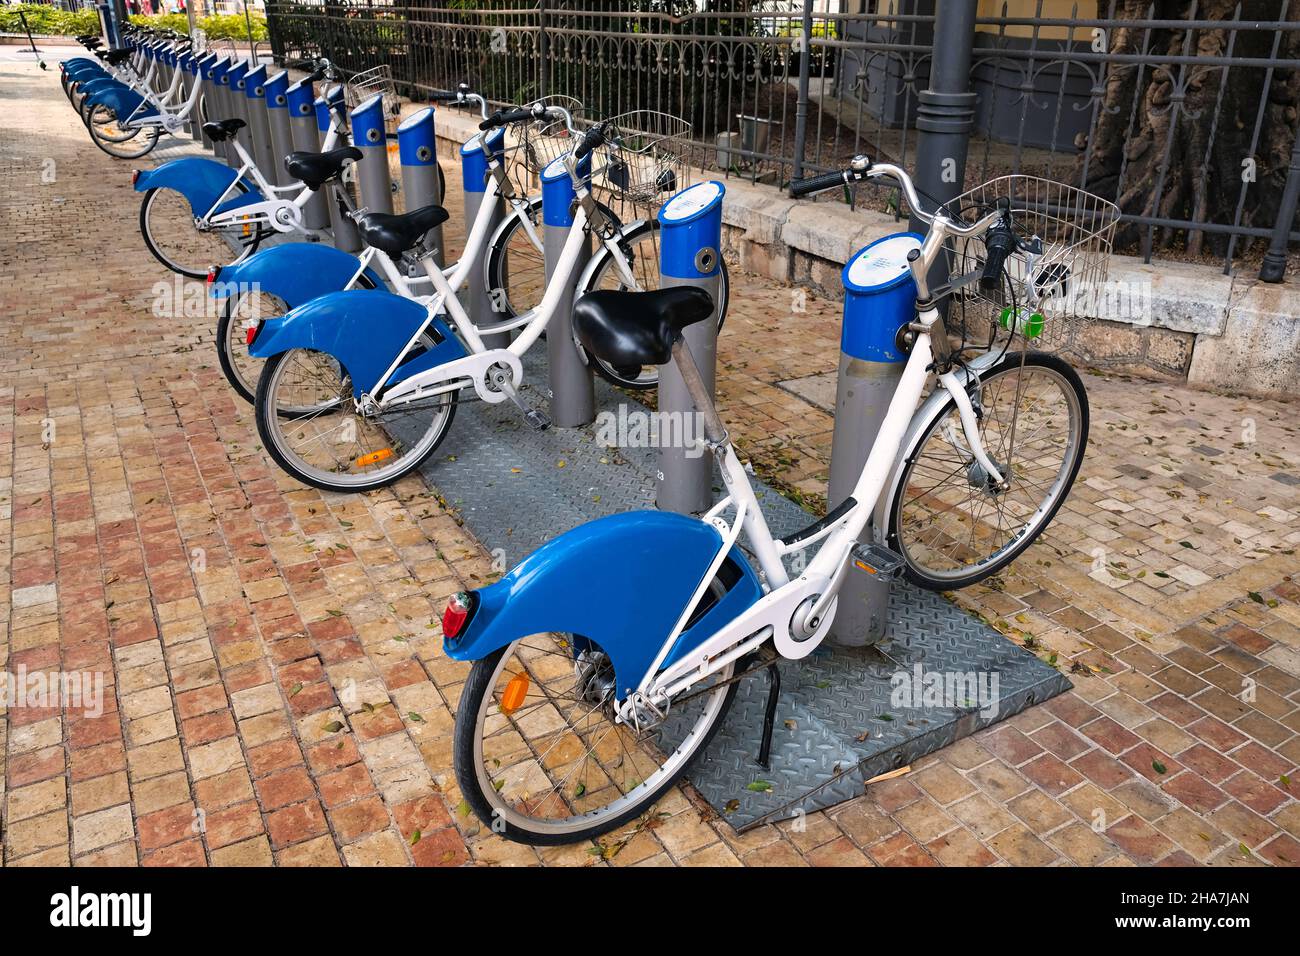 Service de location de vélos urbains dans la ville de Malaga (Espagne Photo  Stock - Alamy